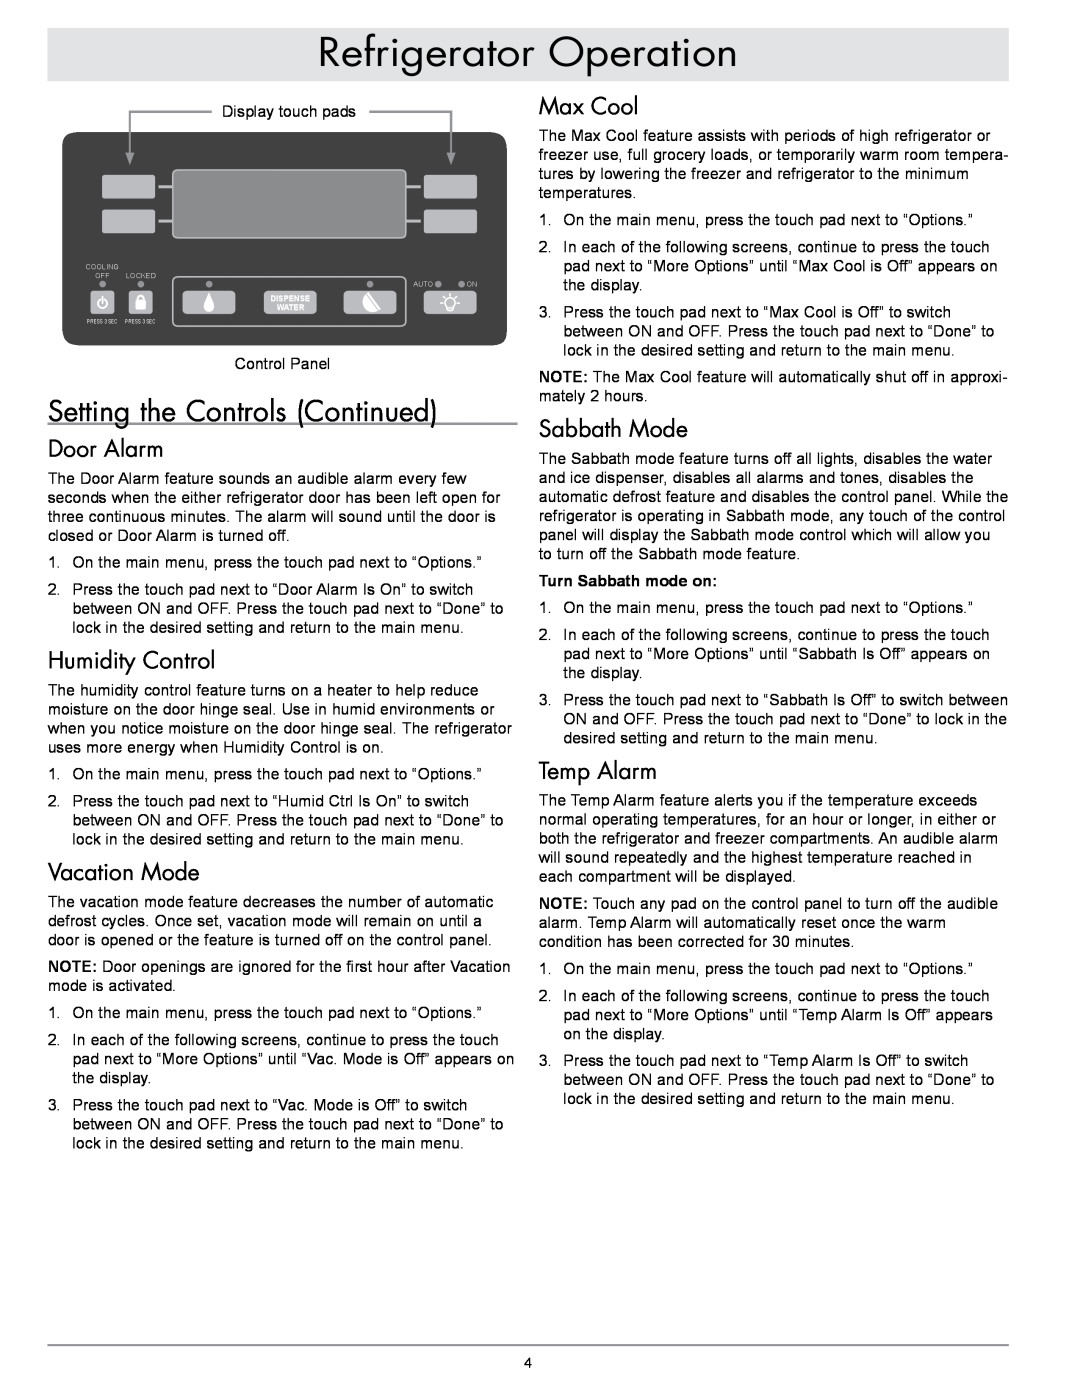 Dacor EF36IWF warranty Setting the Controls Continued, Door Alarm, Humidity Control, Vacation Mode, Max Cool, Sabbath Mode 